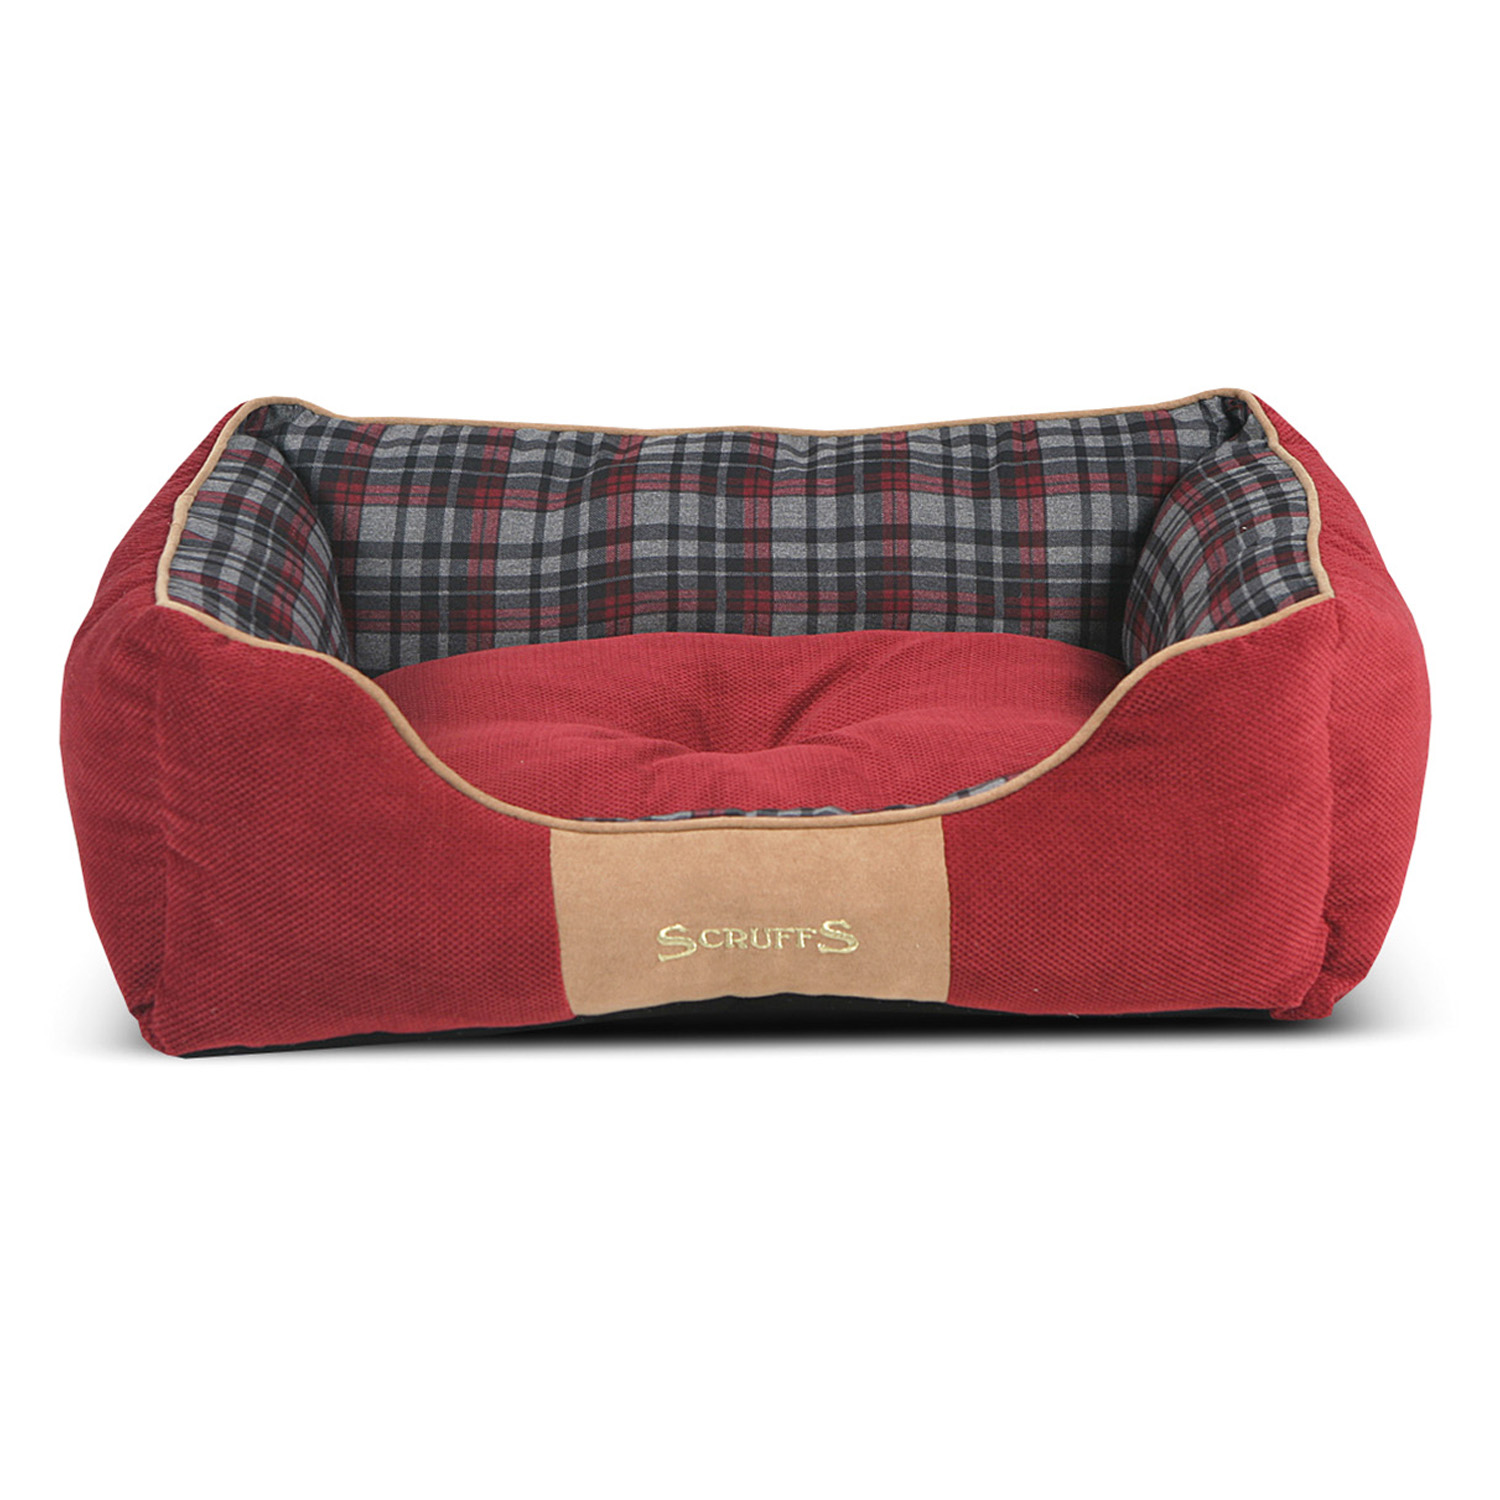 Scruffs Highland Box Bed Red - Medium